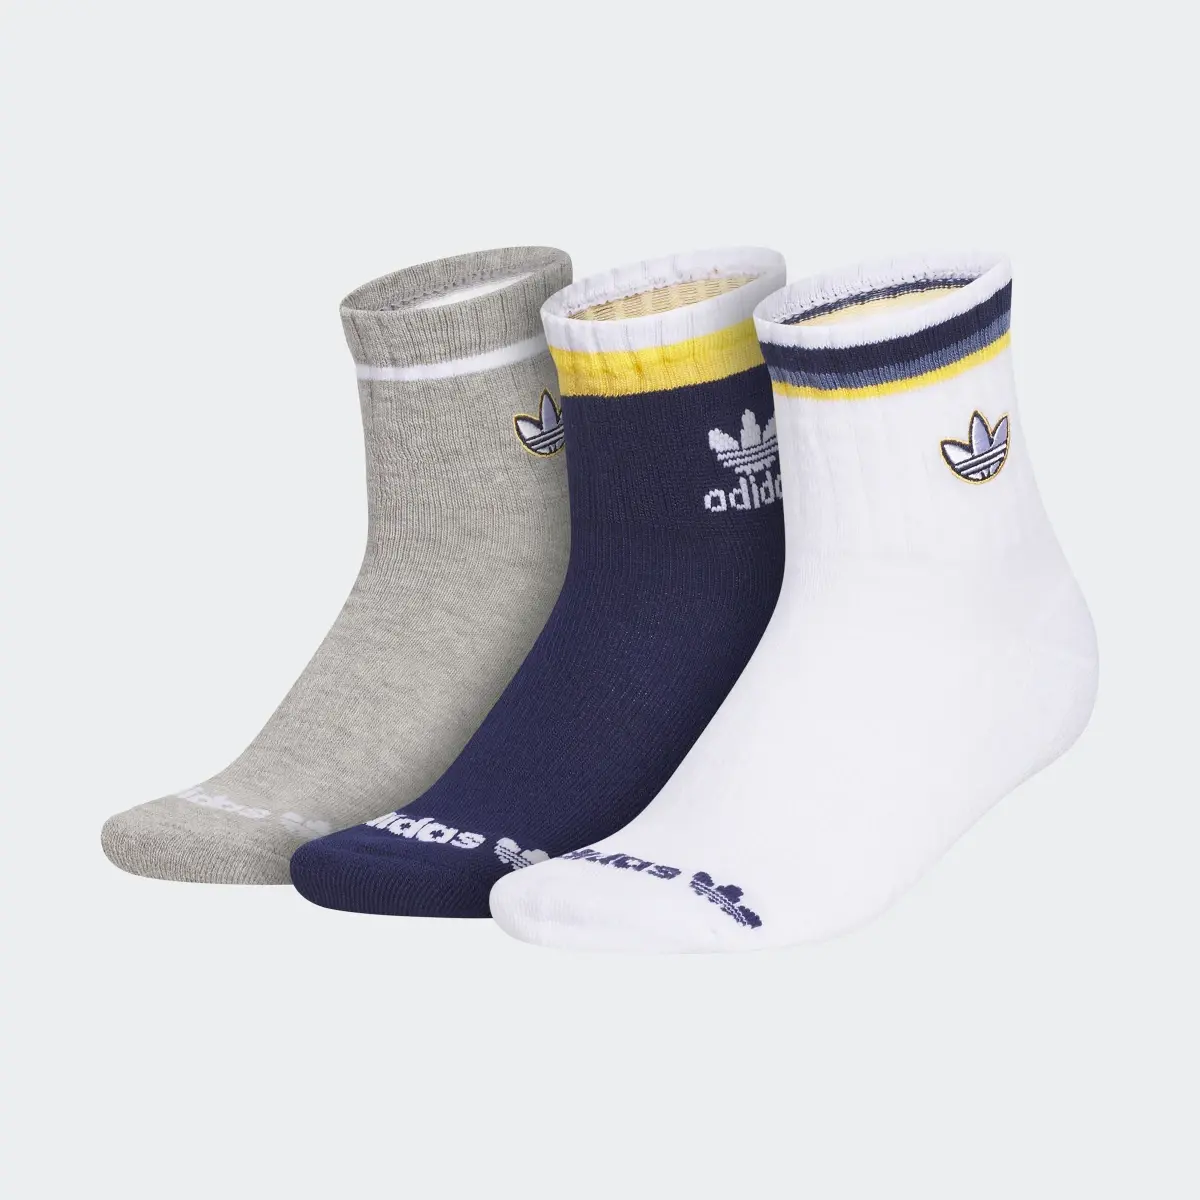 Adidas Ori Aura Socks 3 Pairs. 2